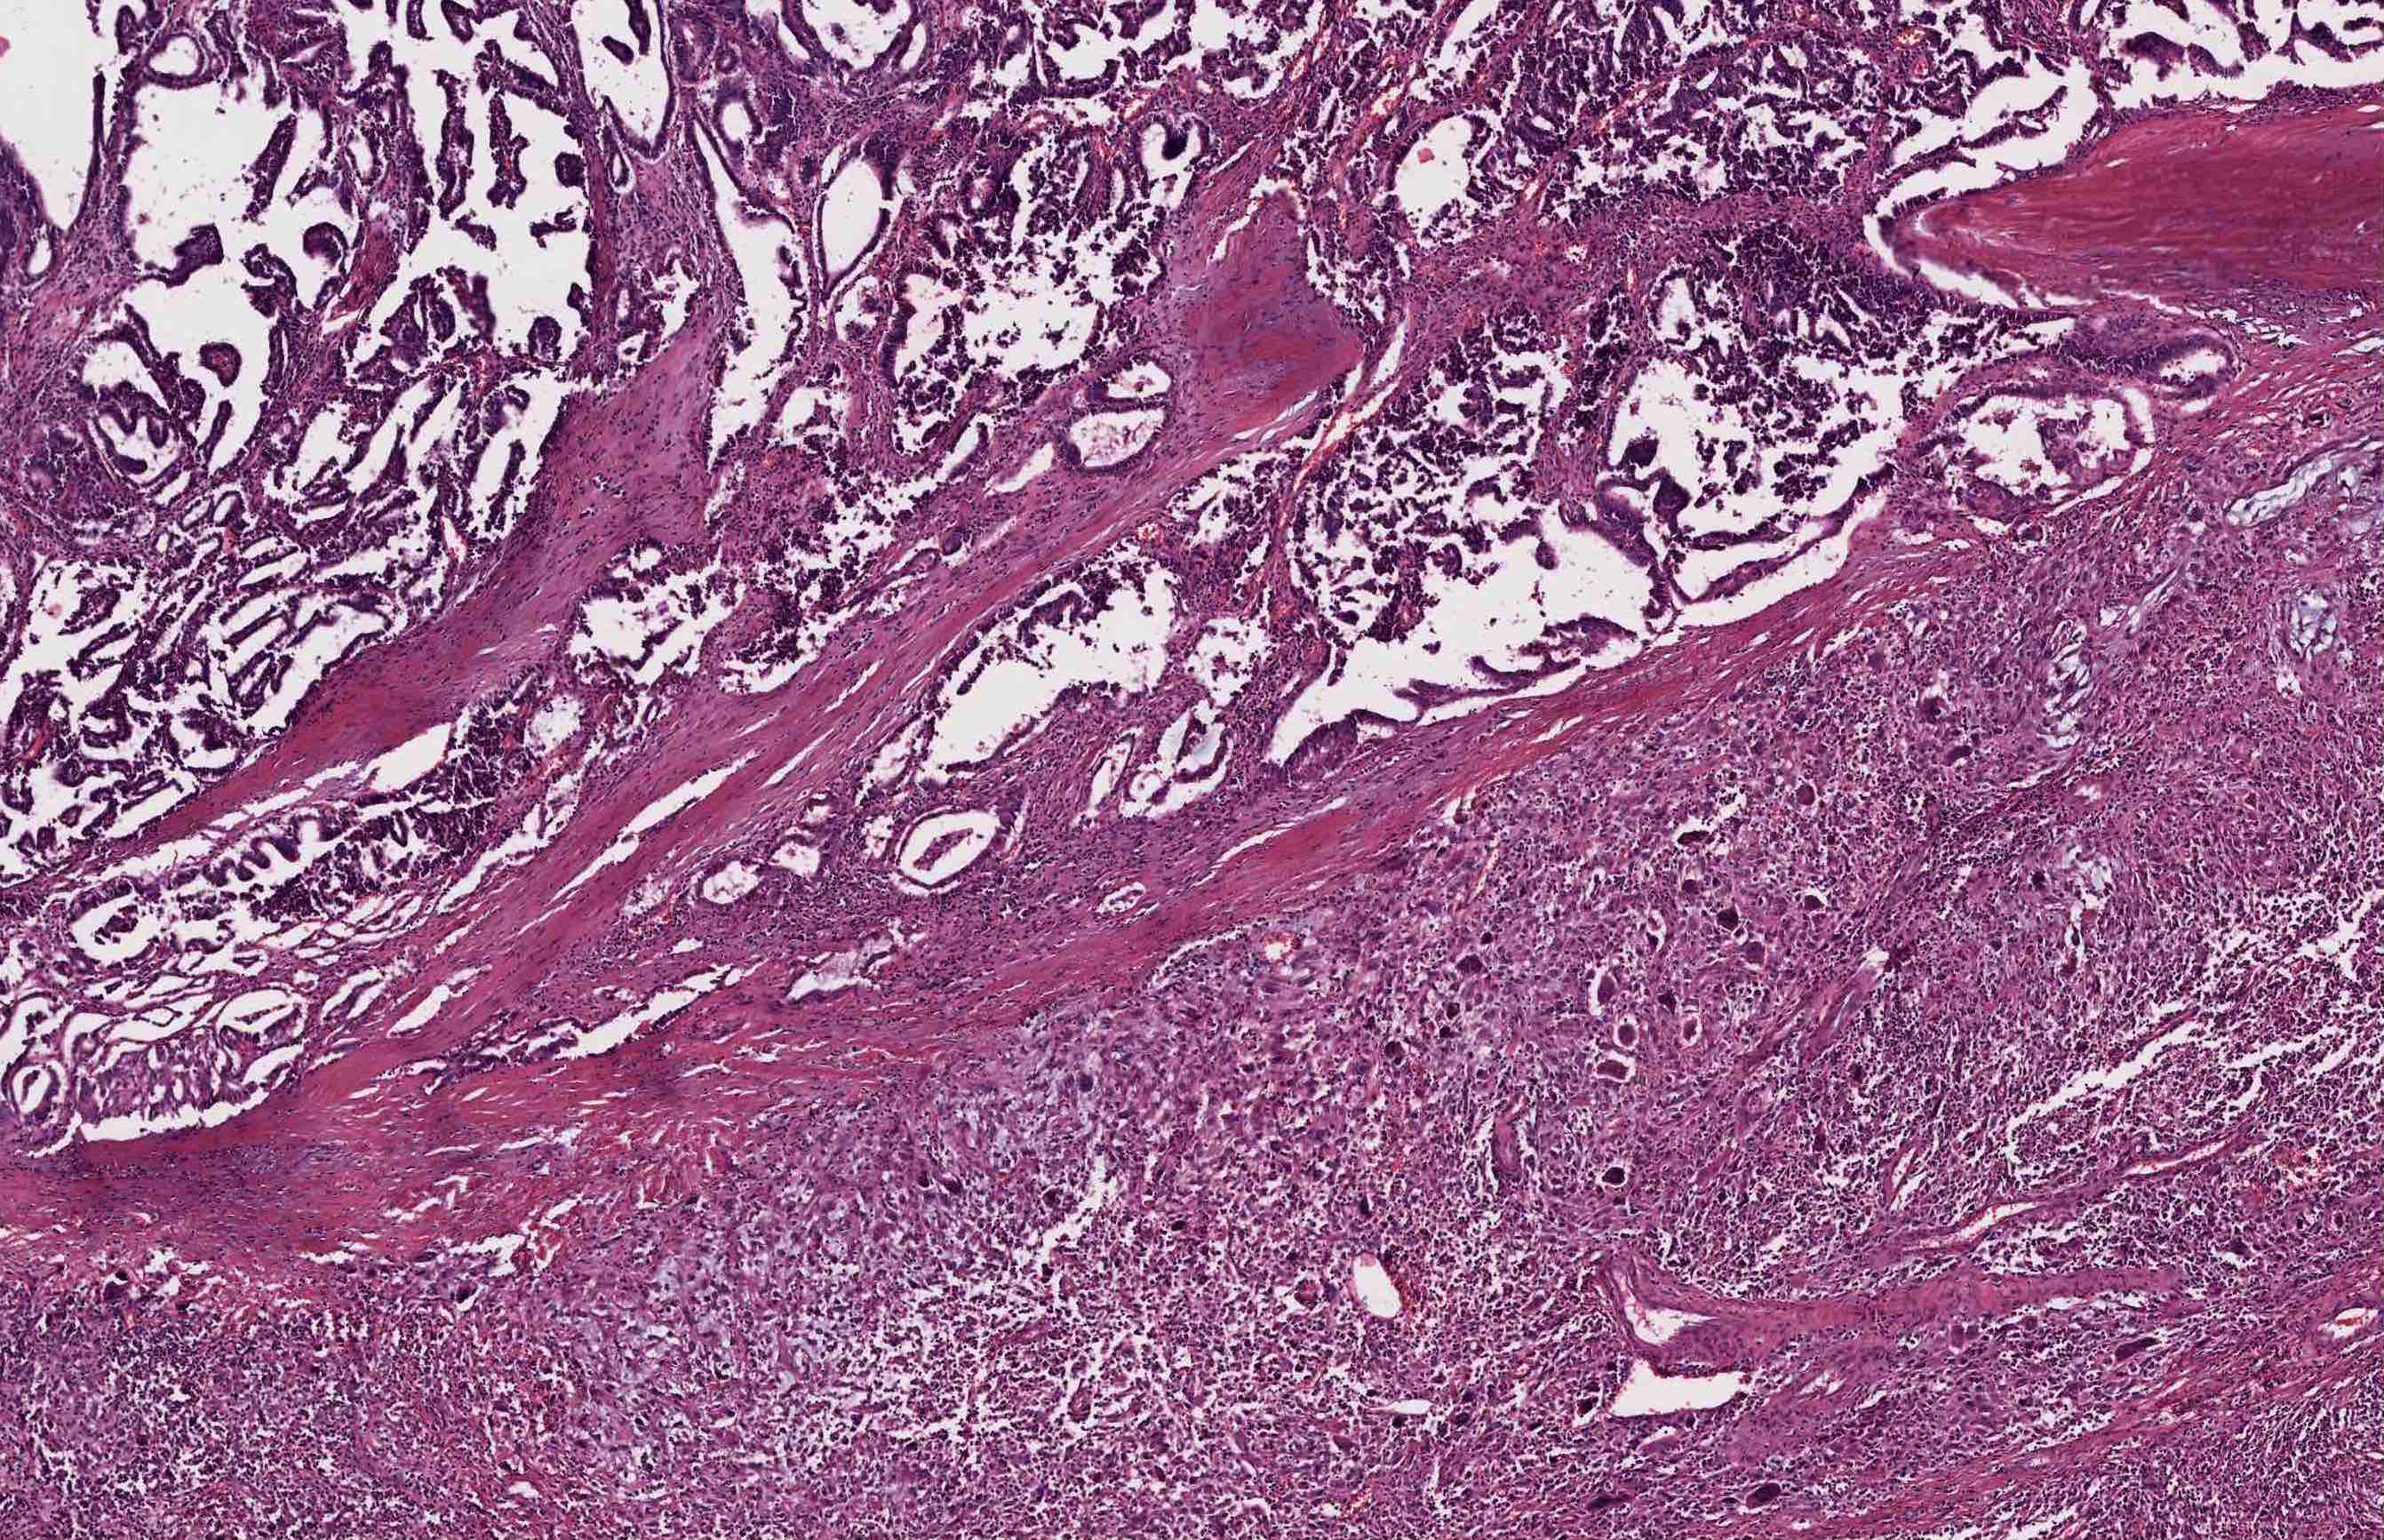 Anaplastic carcinoma and adjacent papillary thyroid carcinoma